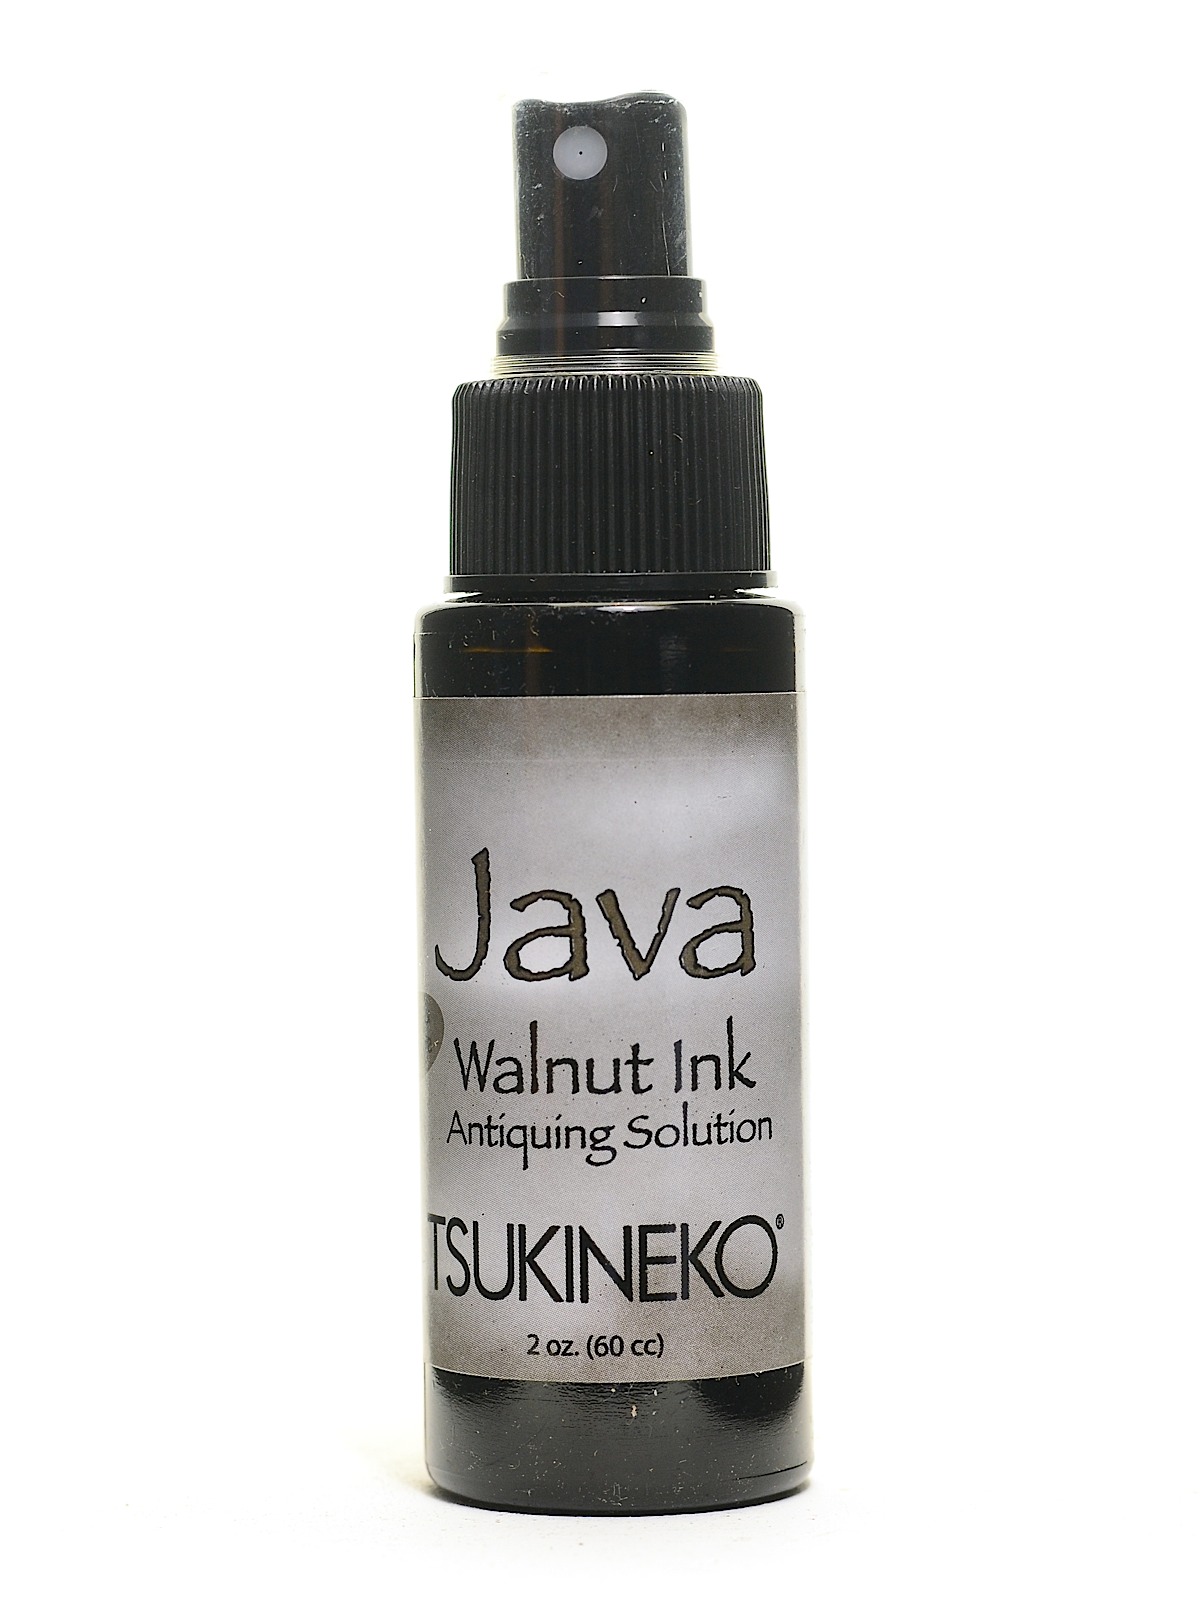 Tsukineko Walnut Ink Antiquing Solution